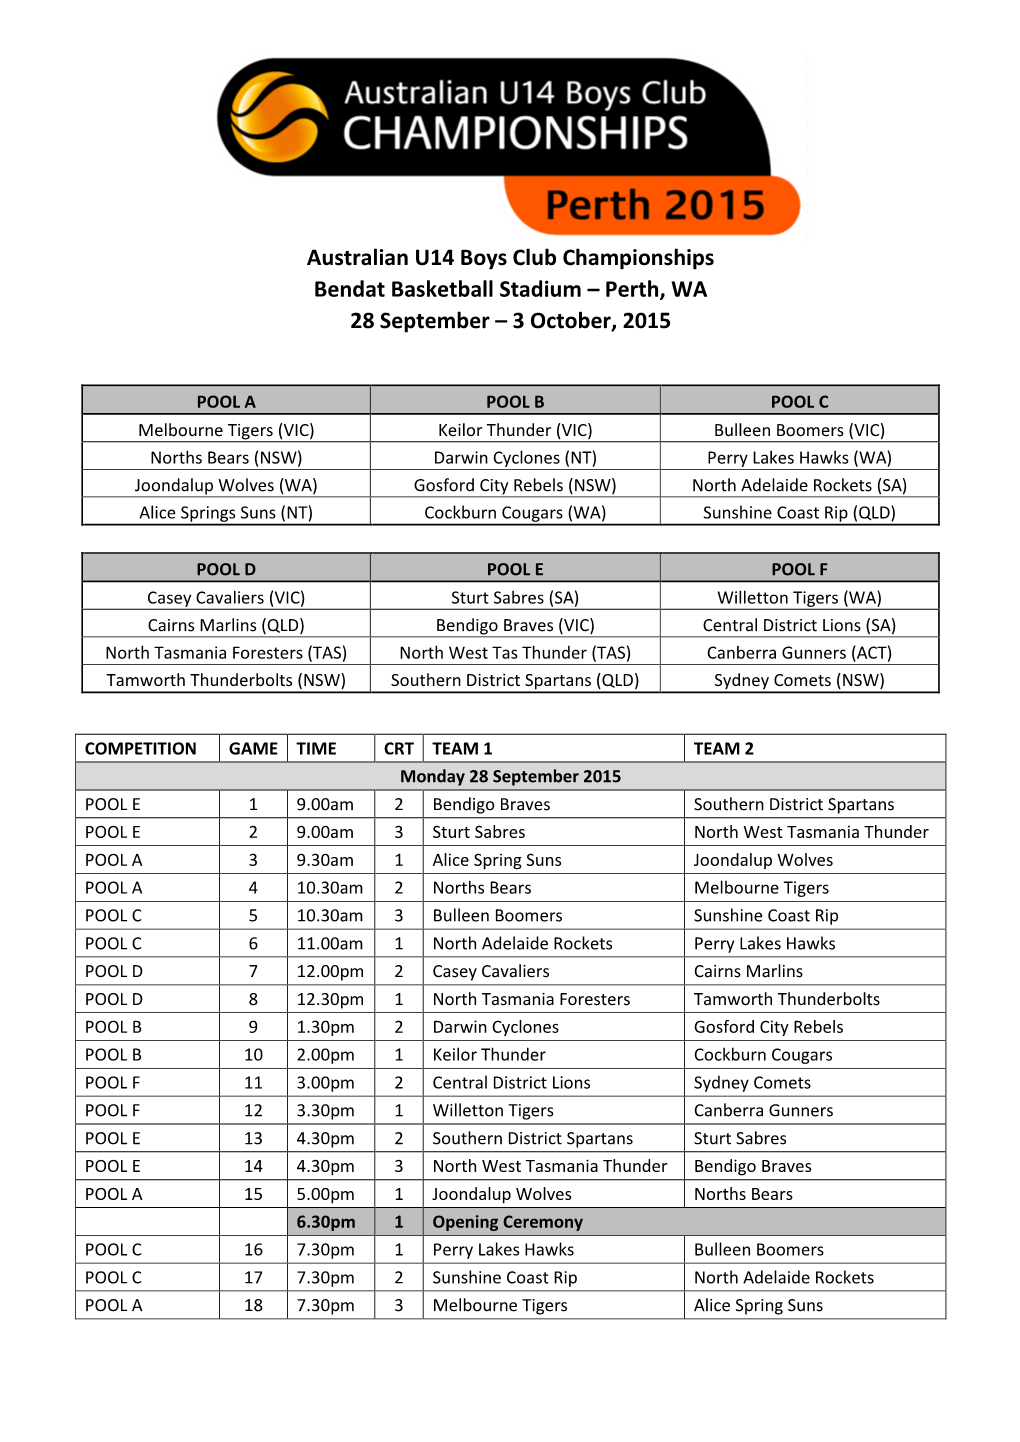 Australian U14 Boys Club Championships Bendat Basketball Stadium – Perth, WA 28 September – 3 October, 2015